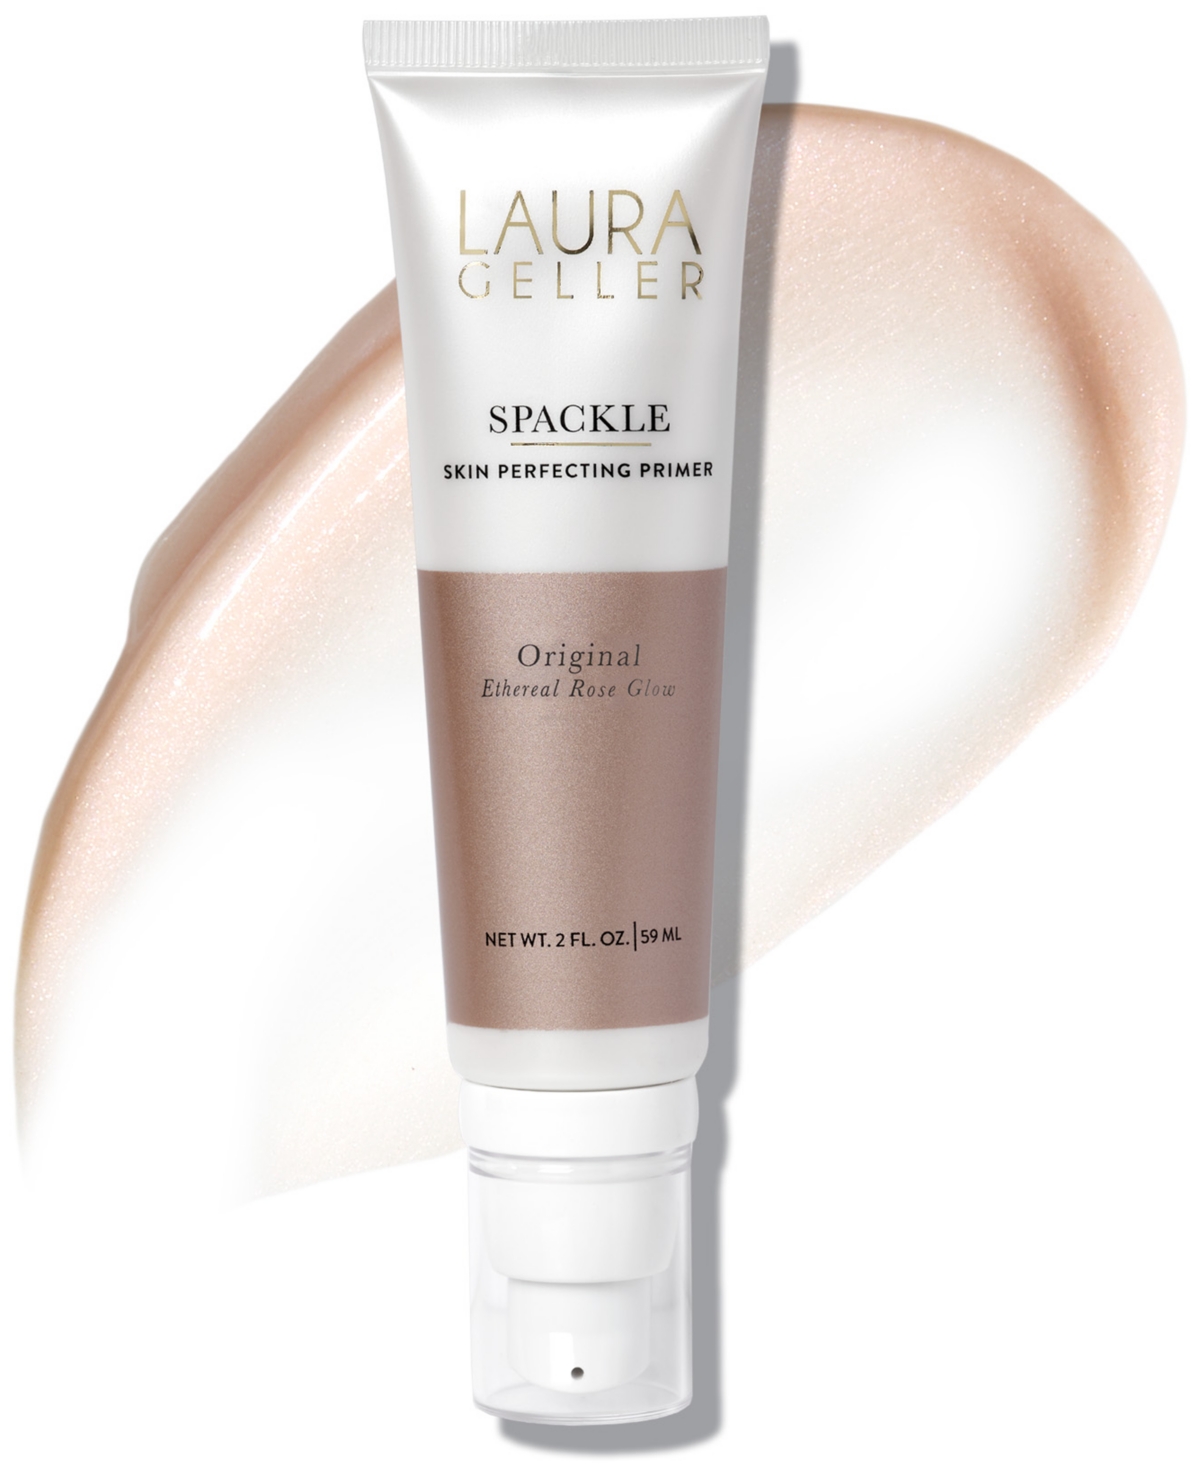 Laura Geller Beauty Spackle Skin Perfecting Primer: Original In Ethereal Rose Glow